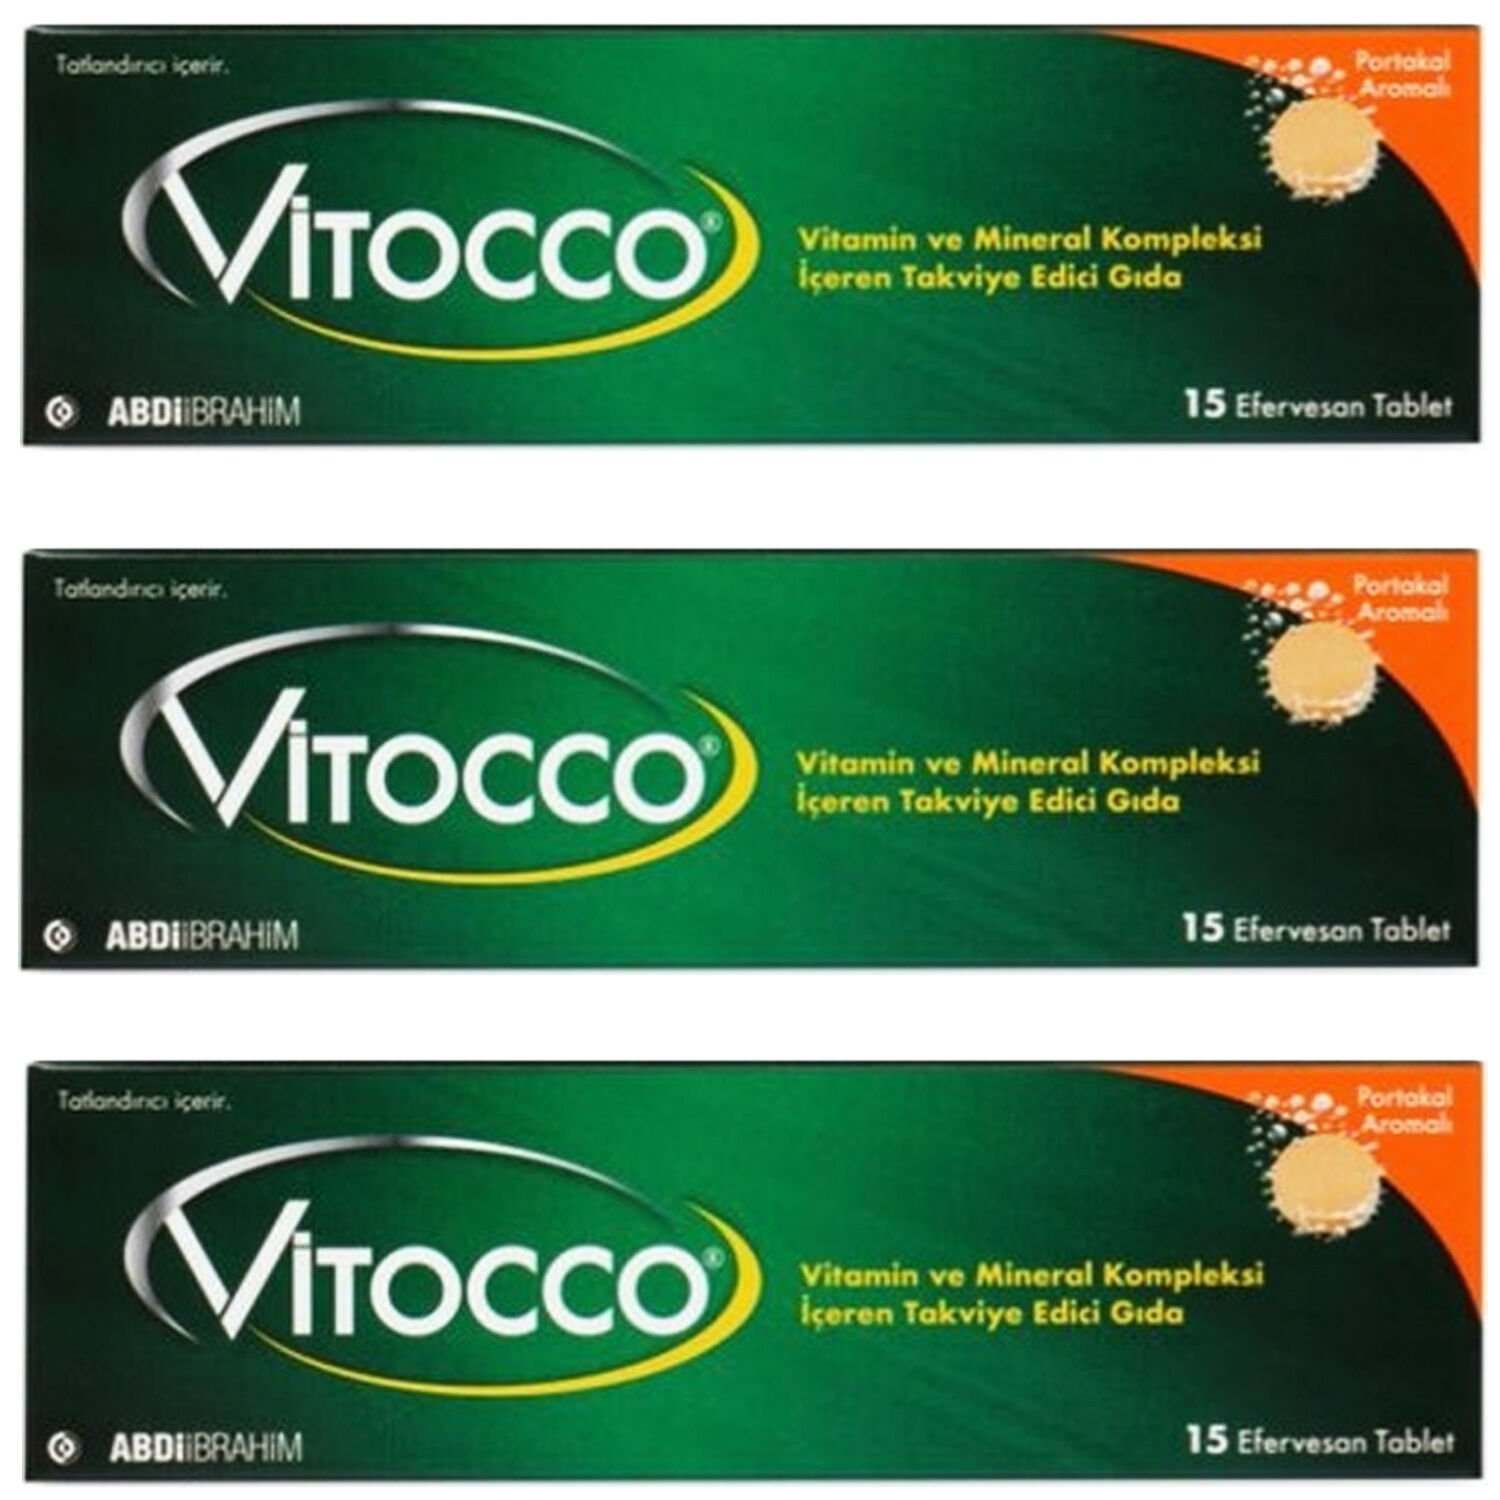 Vitocco Vitamin Ve Mineral Kompleksi 15 Efervesan Tablet 3 ADET